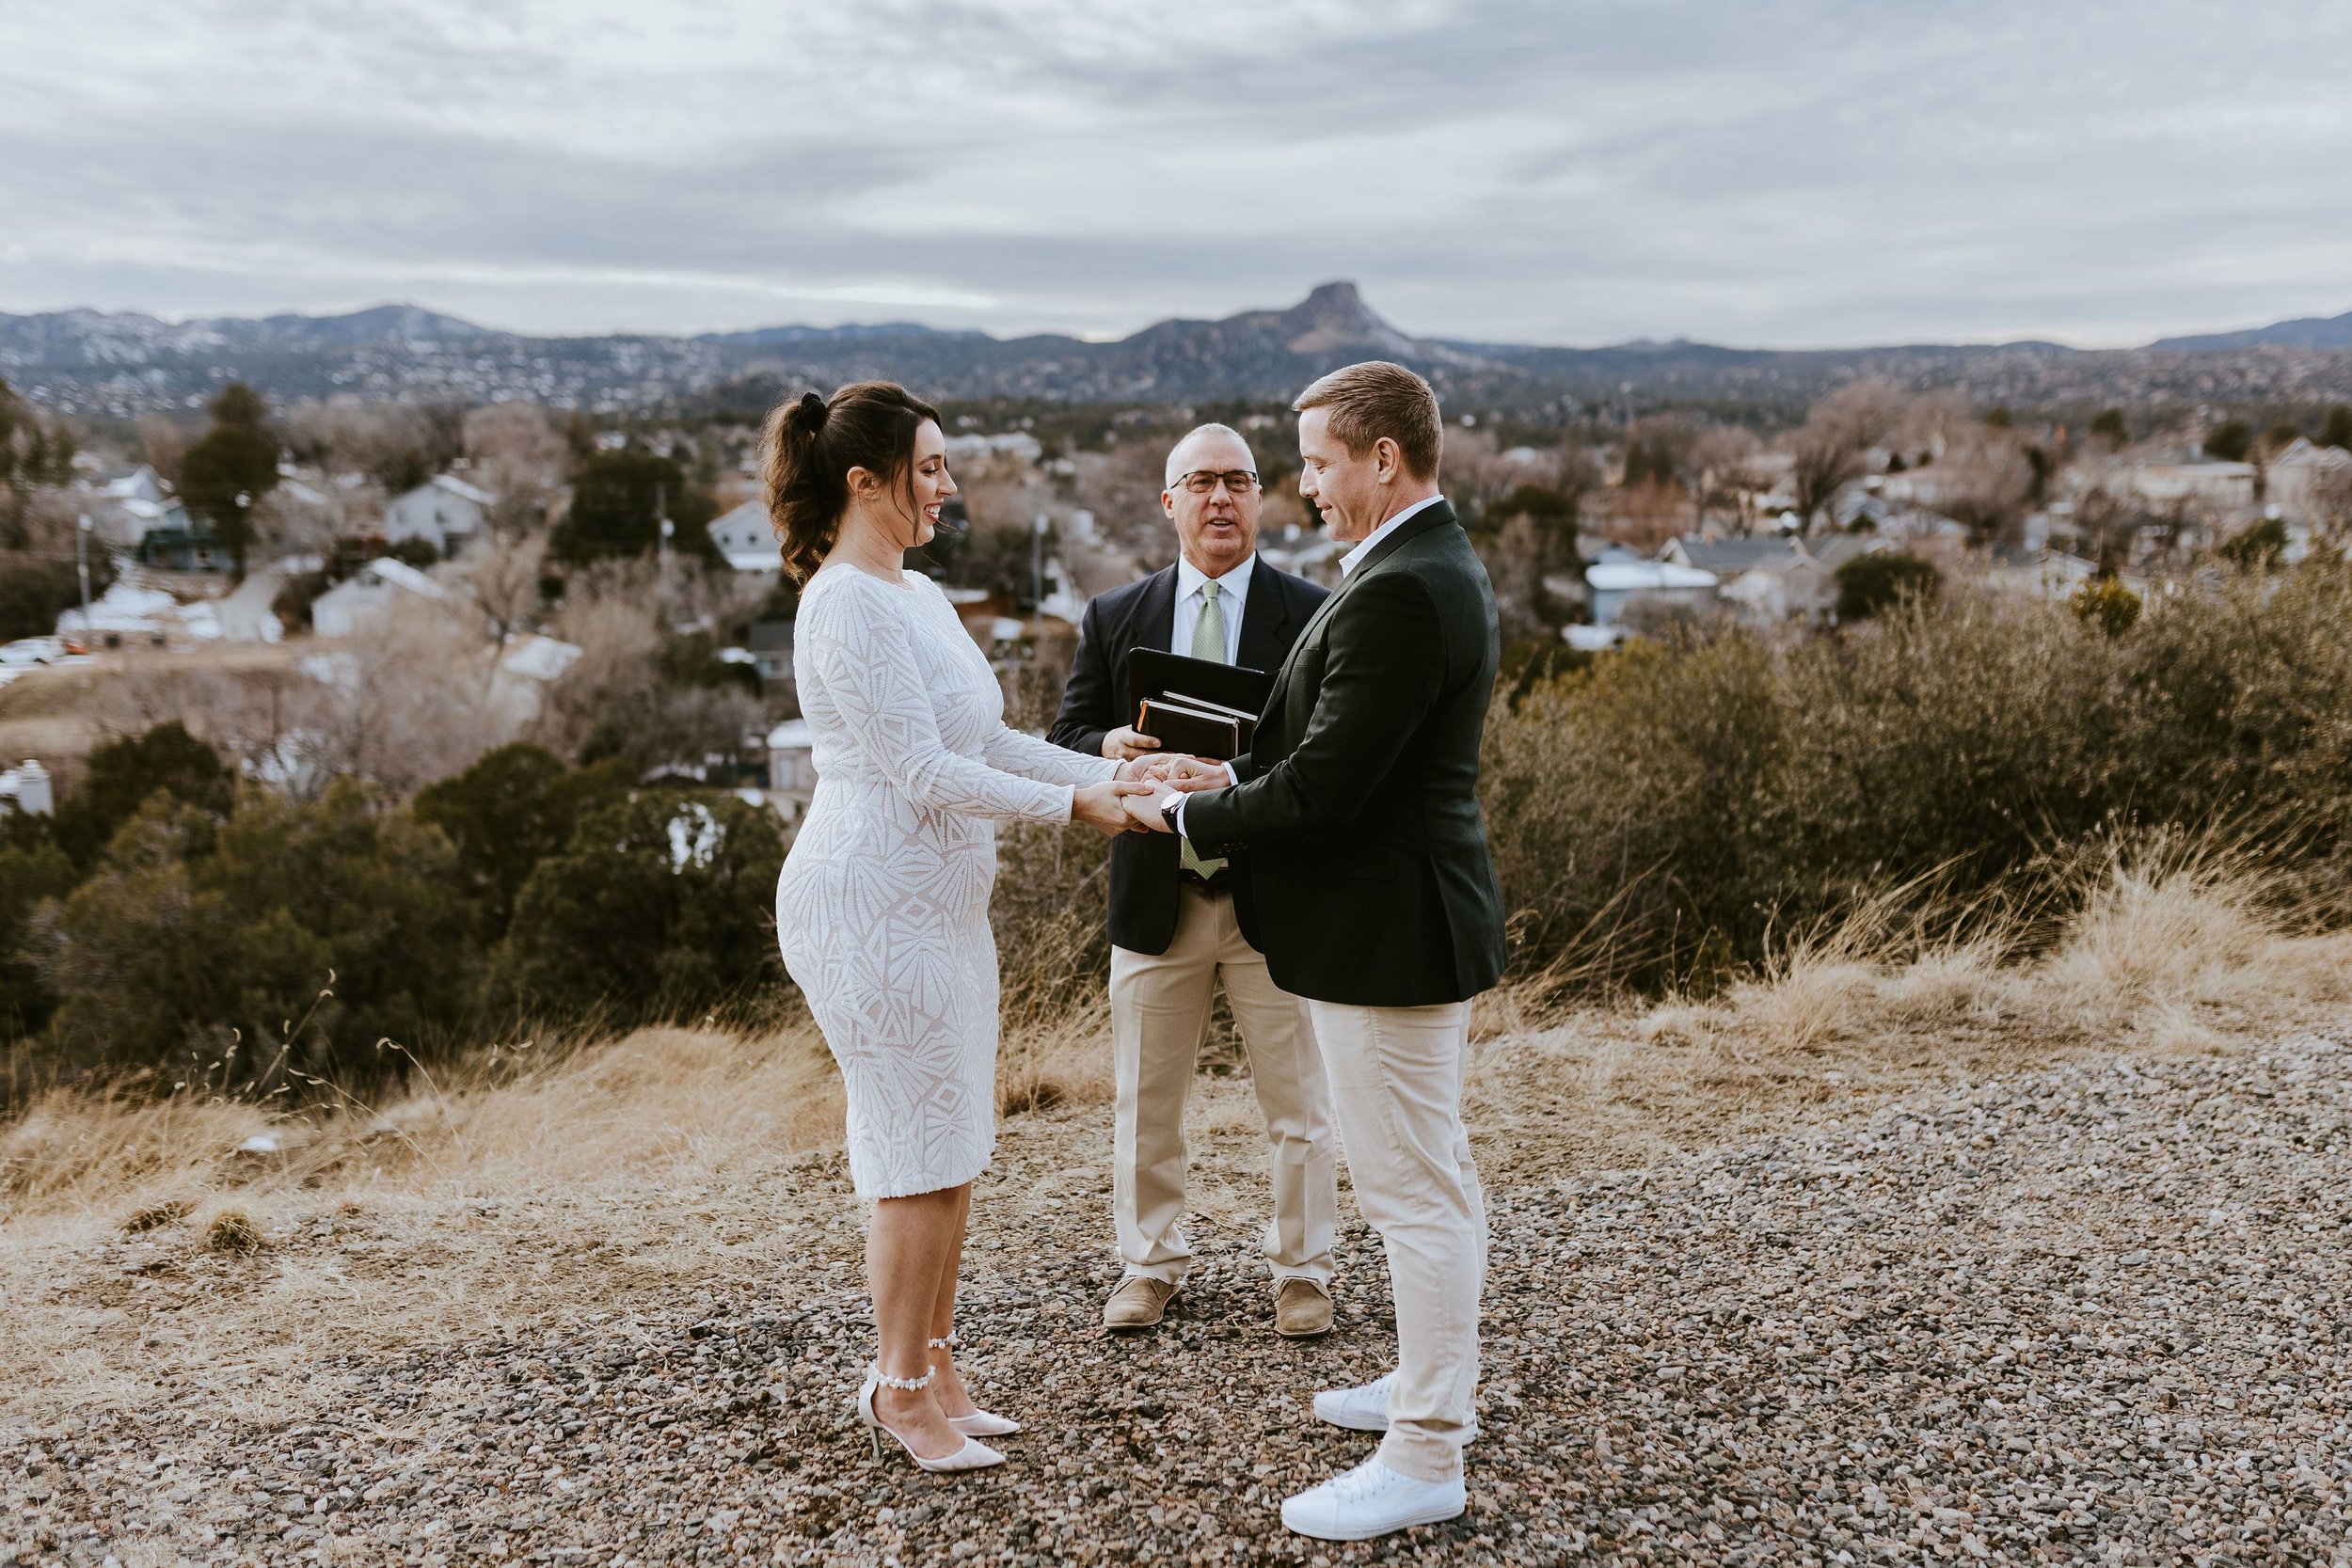 Bride and groom hold hands during Prescott elopement ceremony